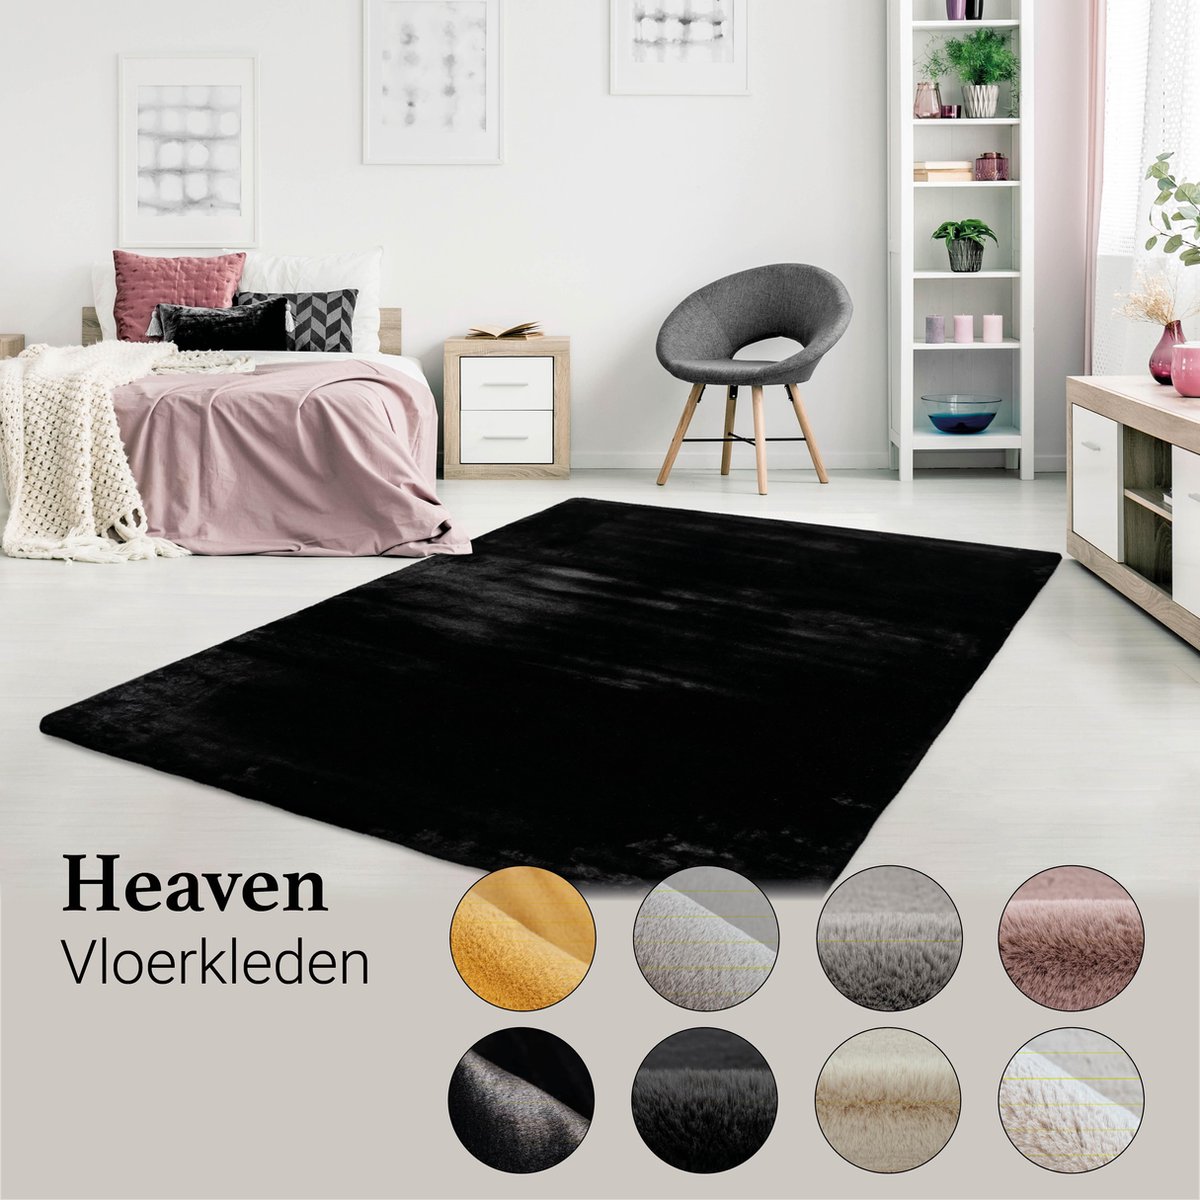 Vloerkleed Heaven Black - Hoogpolig Shaggy - 160x230cm (tweedekans)